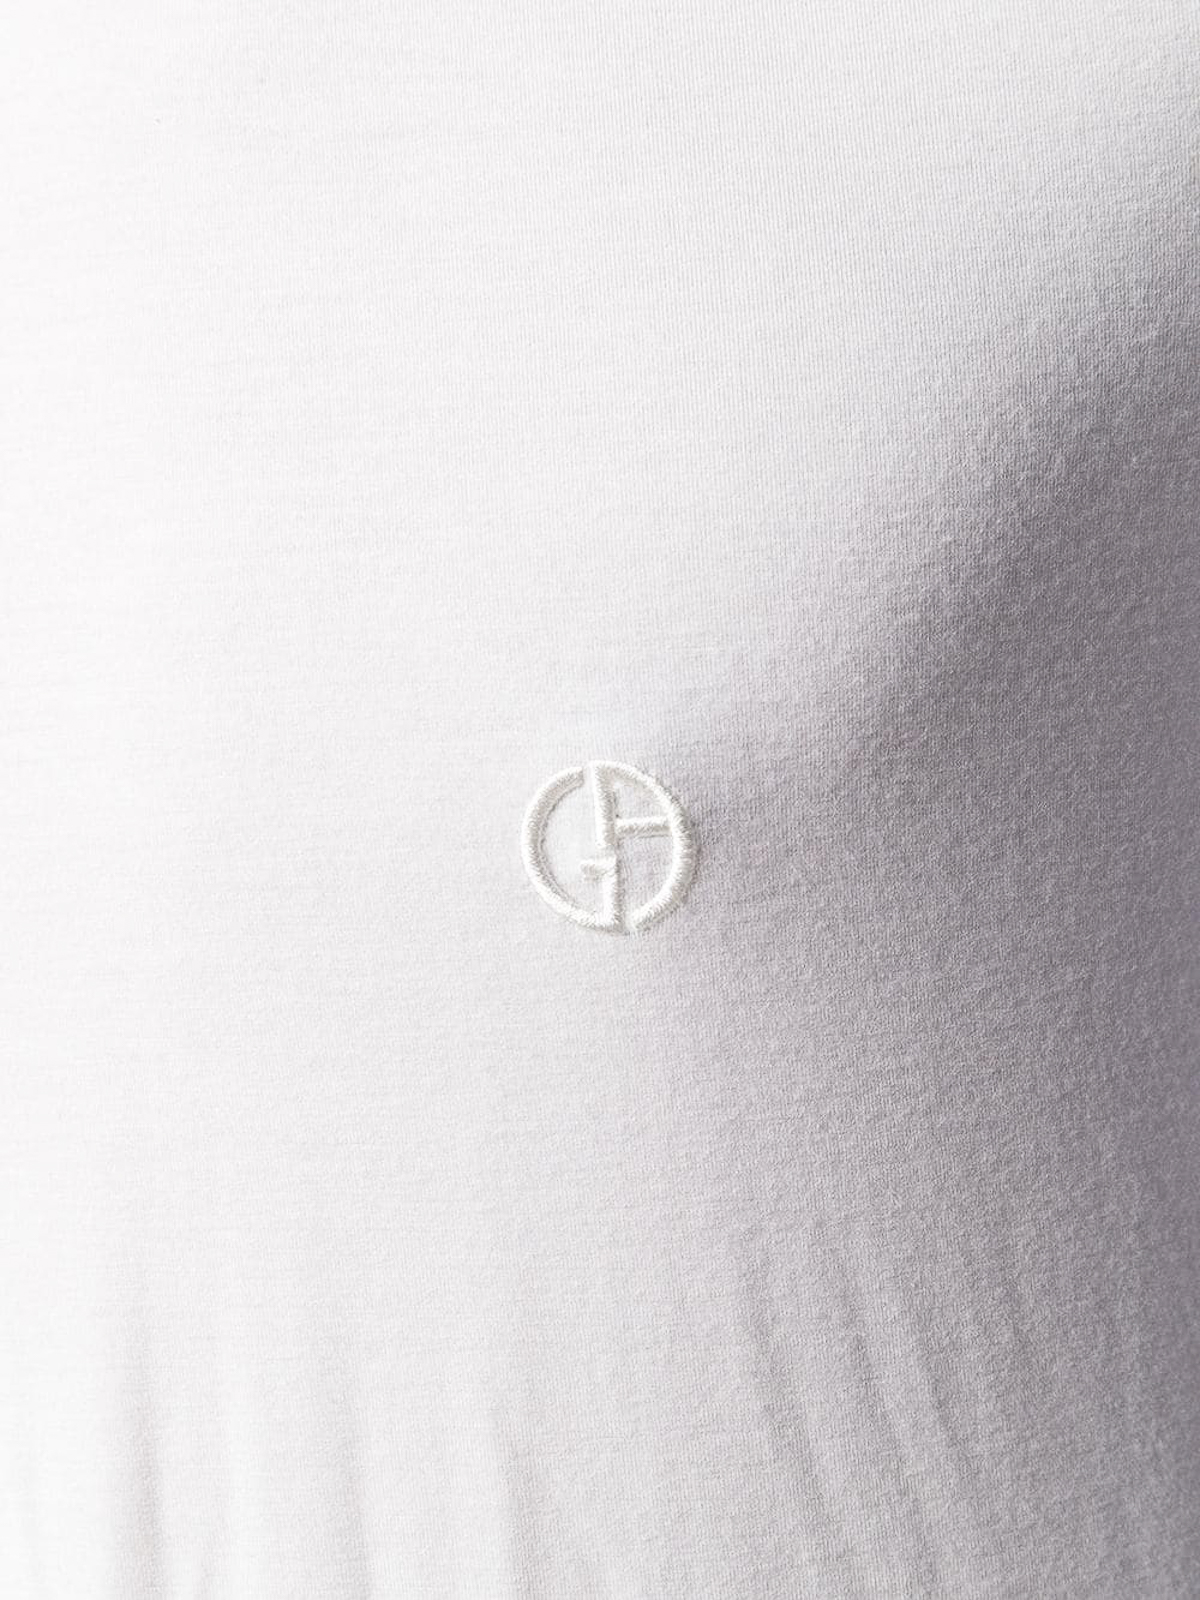 Shop Giorgio Armani Camiseta - Blanco